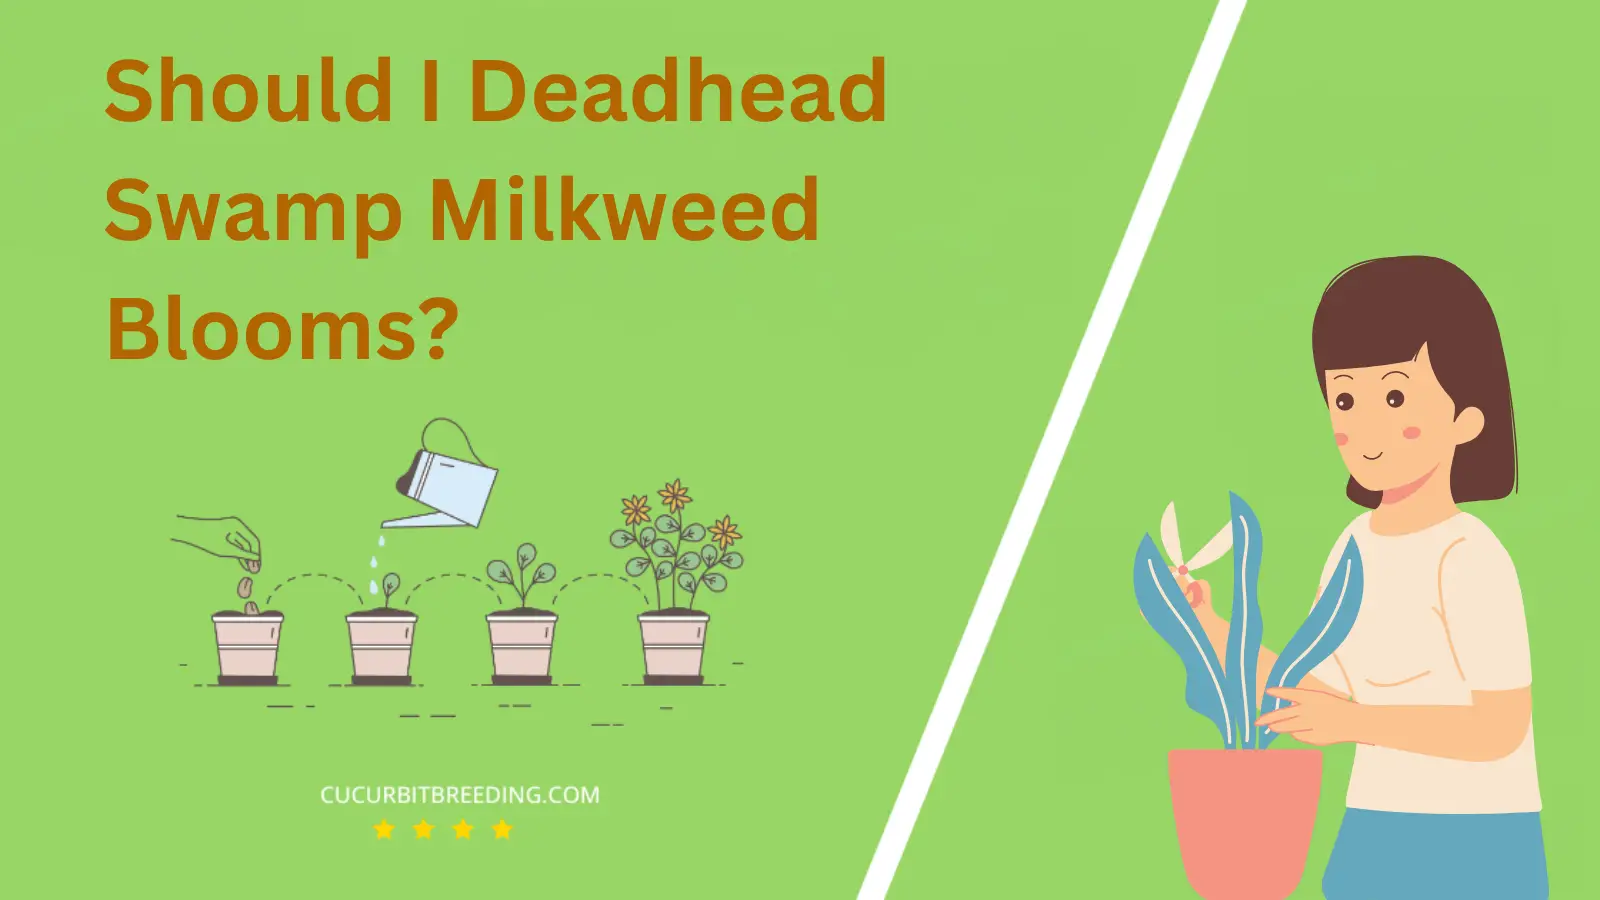 Should I Deadhead Swamp Milkweed Blooms?